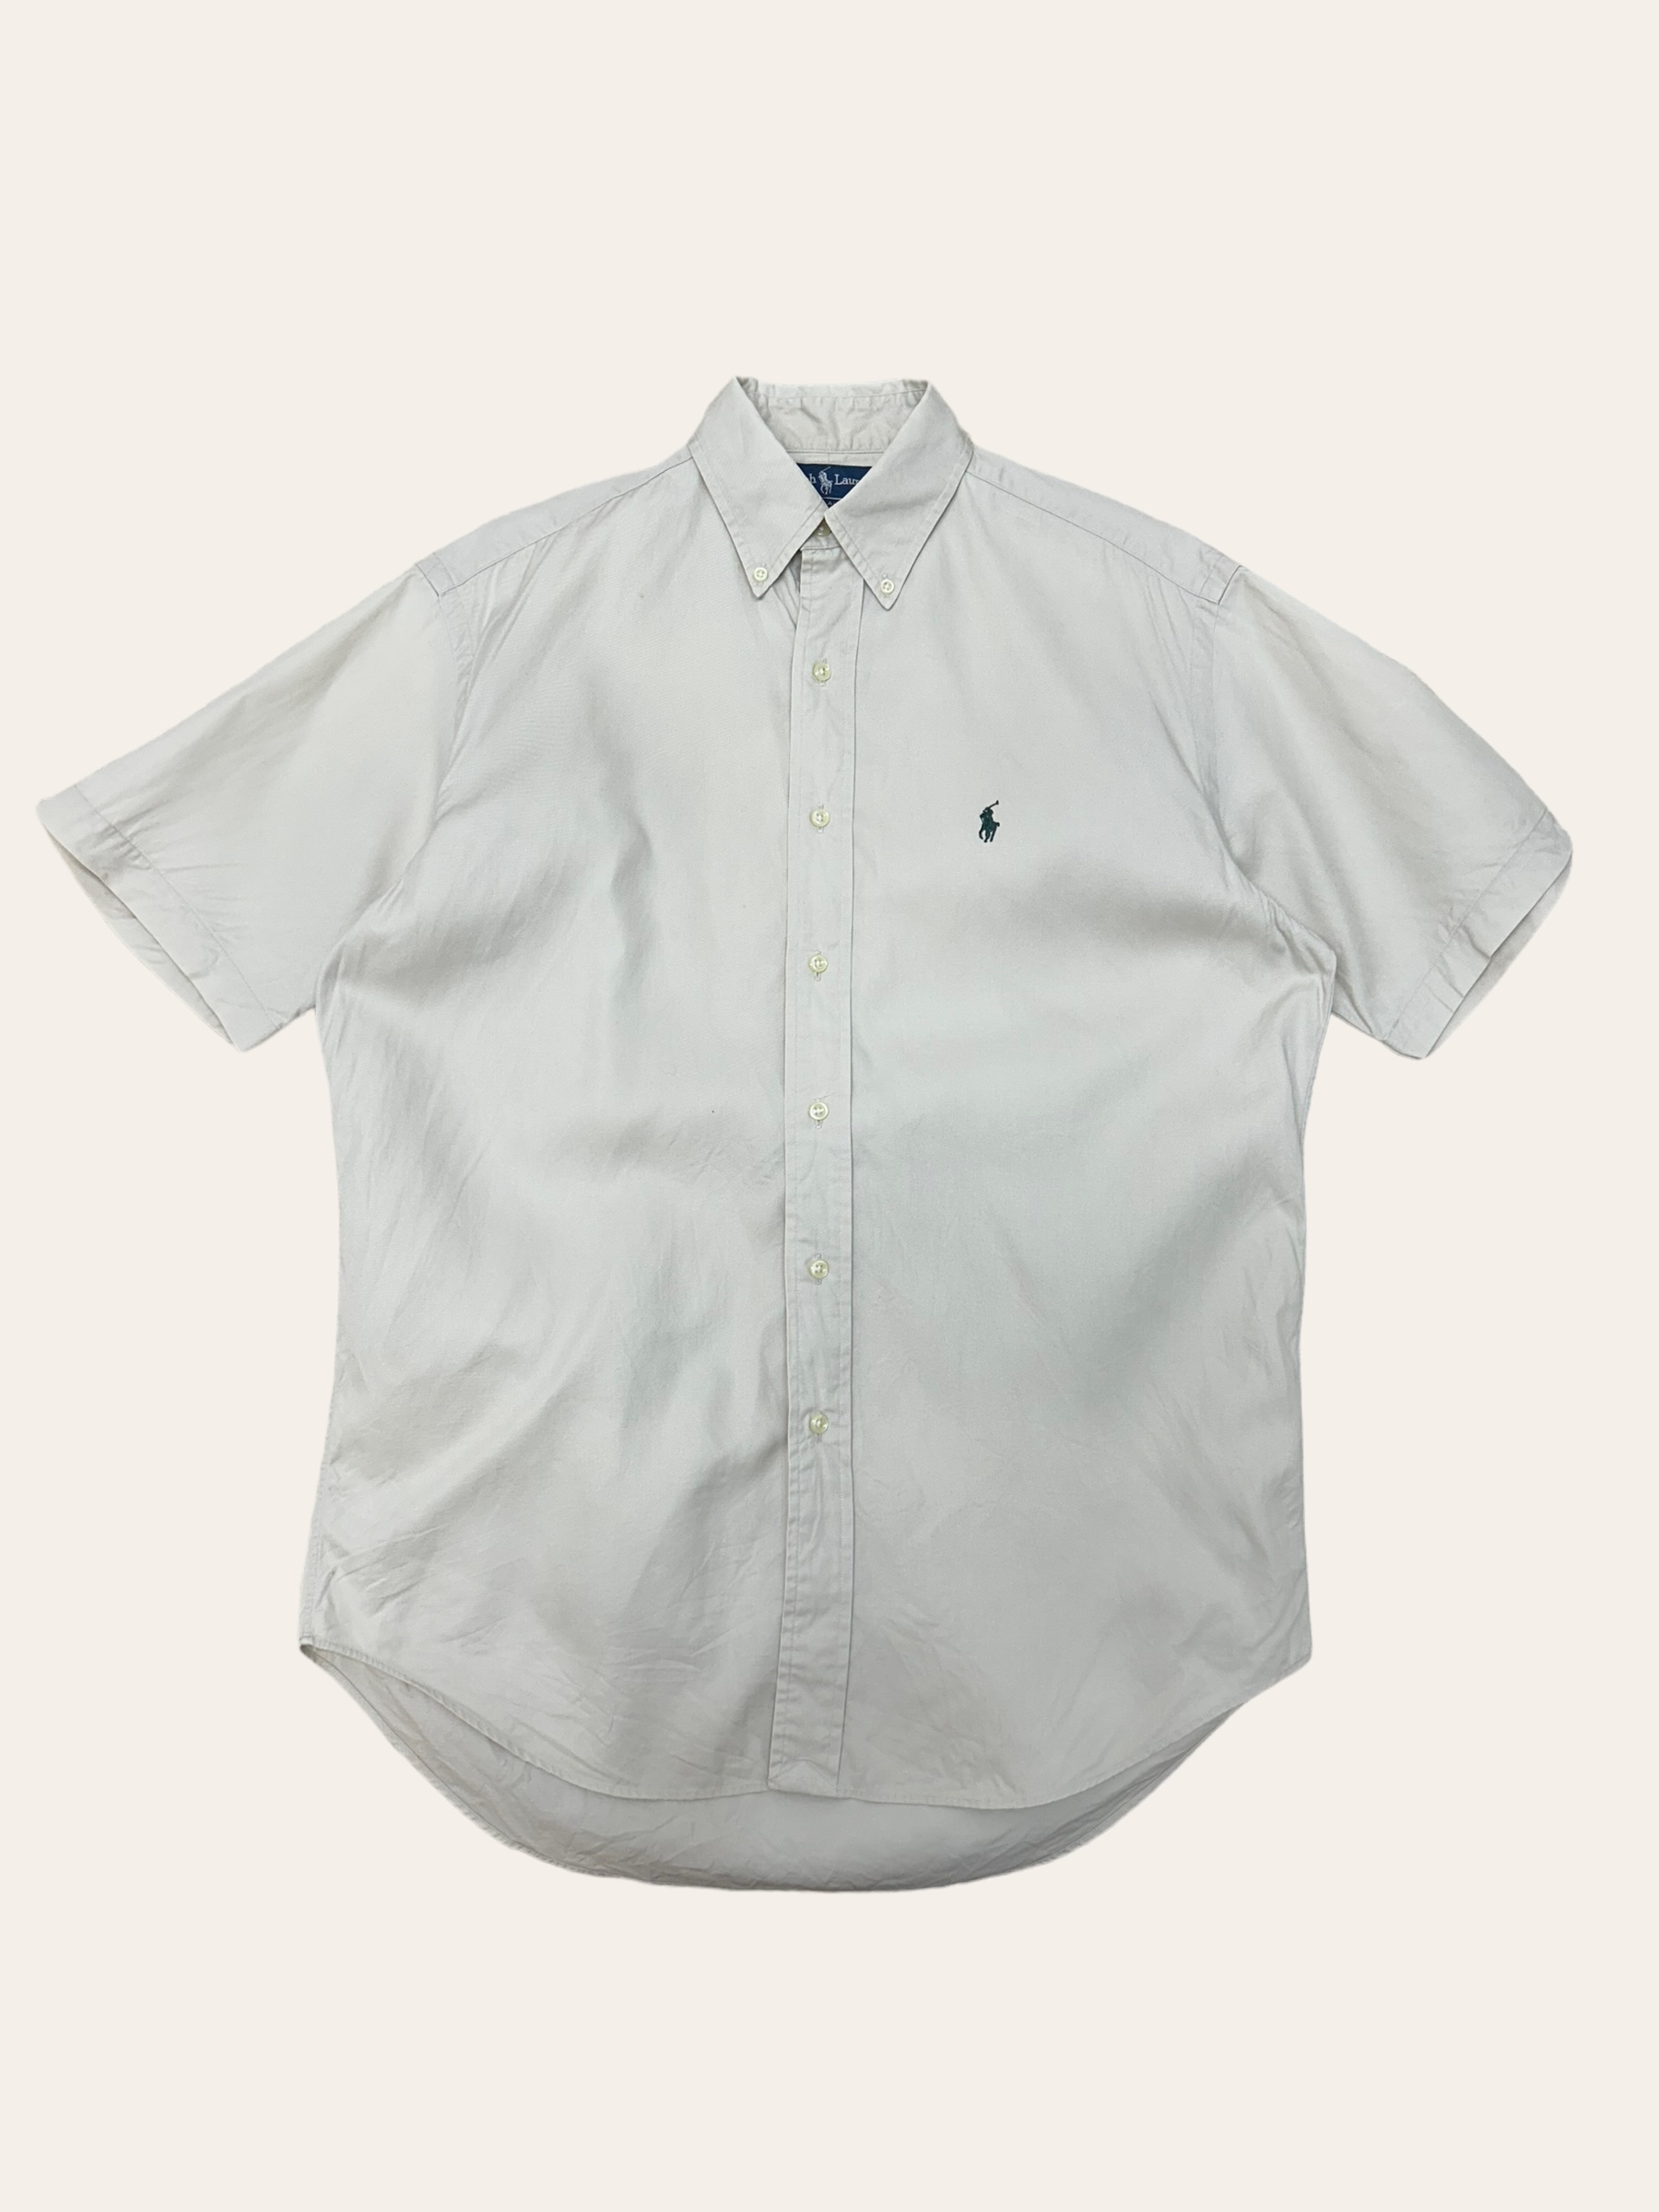 (From USA)Polo ralph lauren beige solid short sleeve shirt S